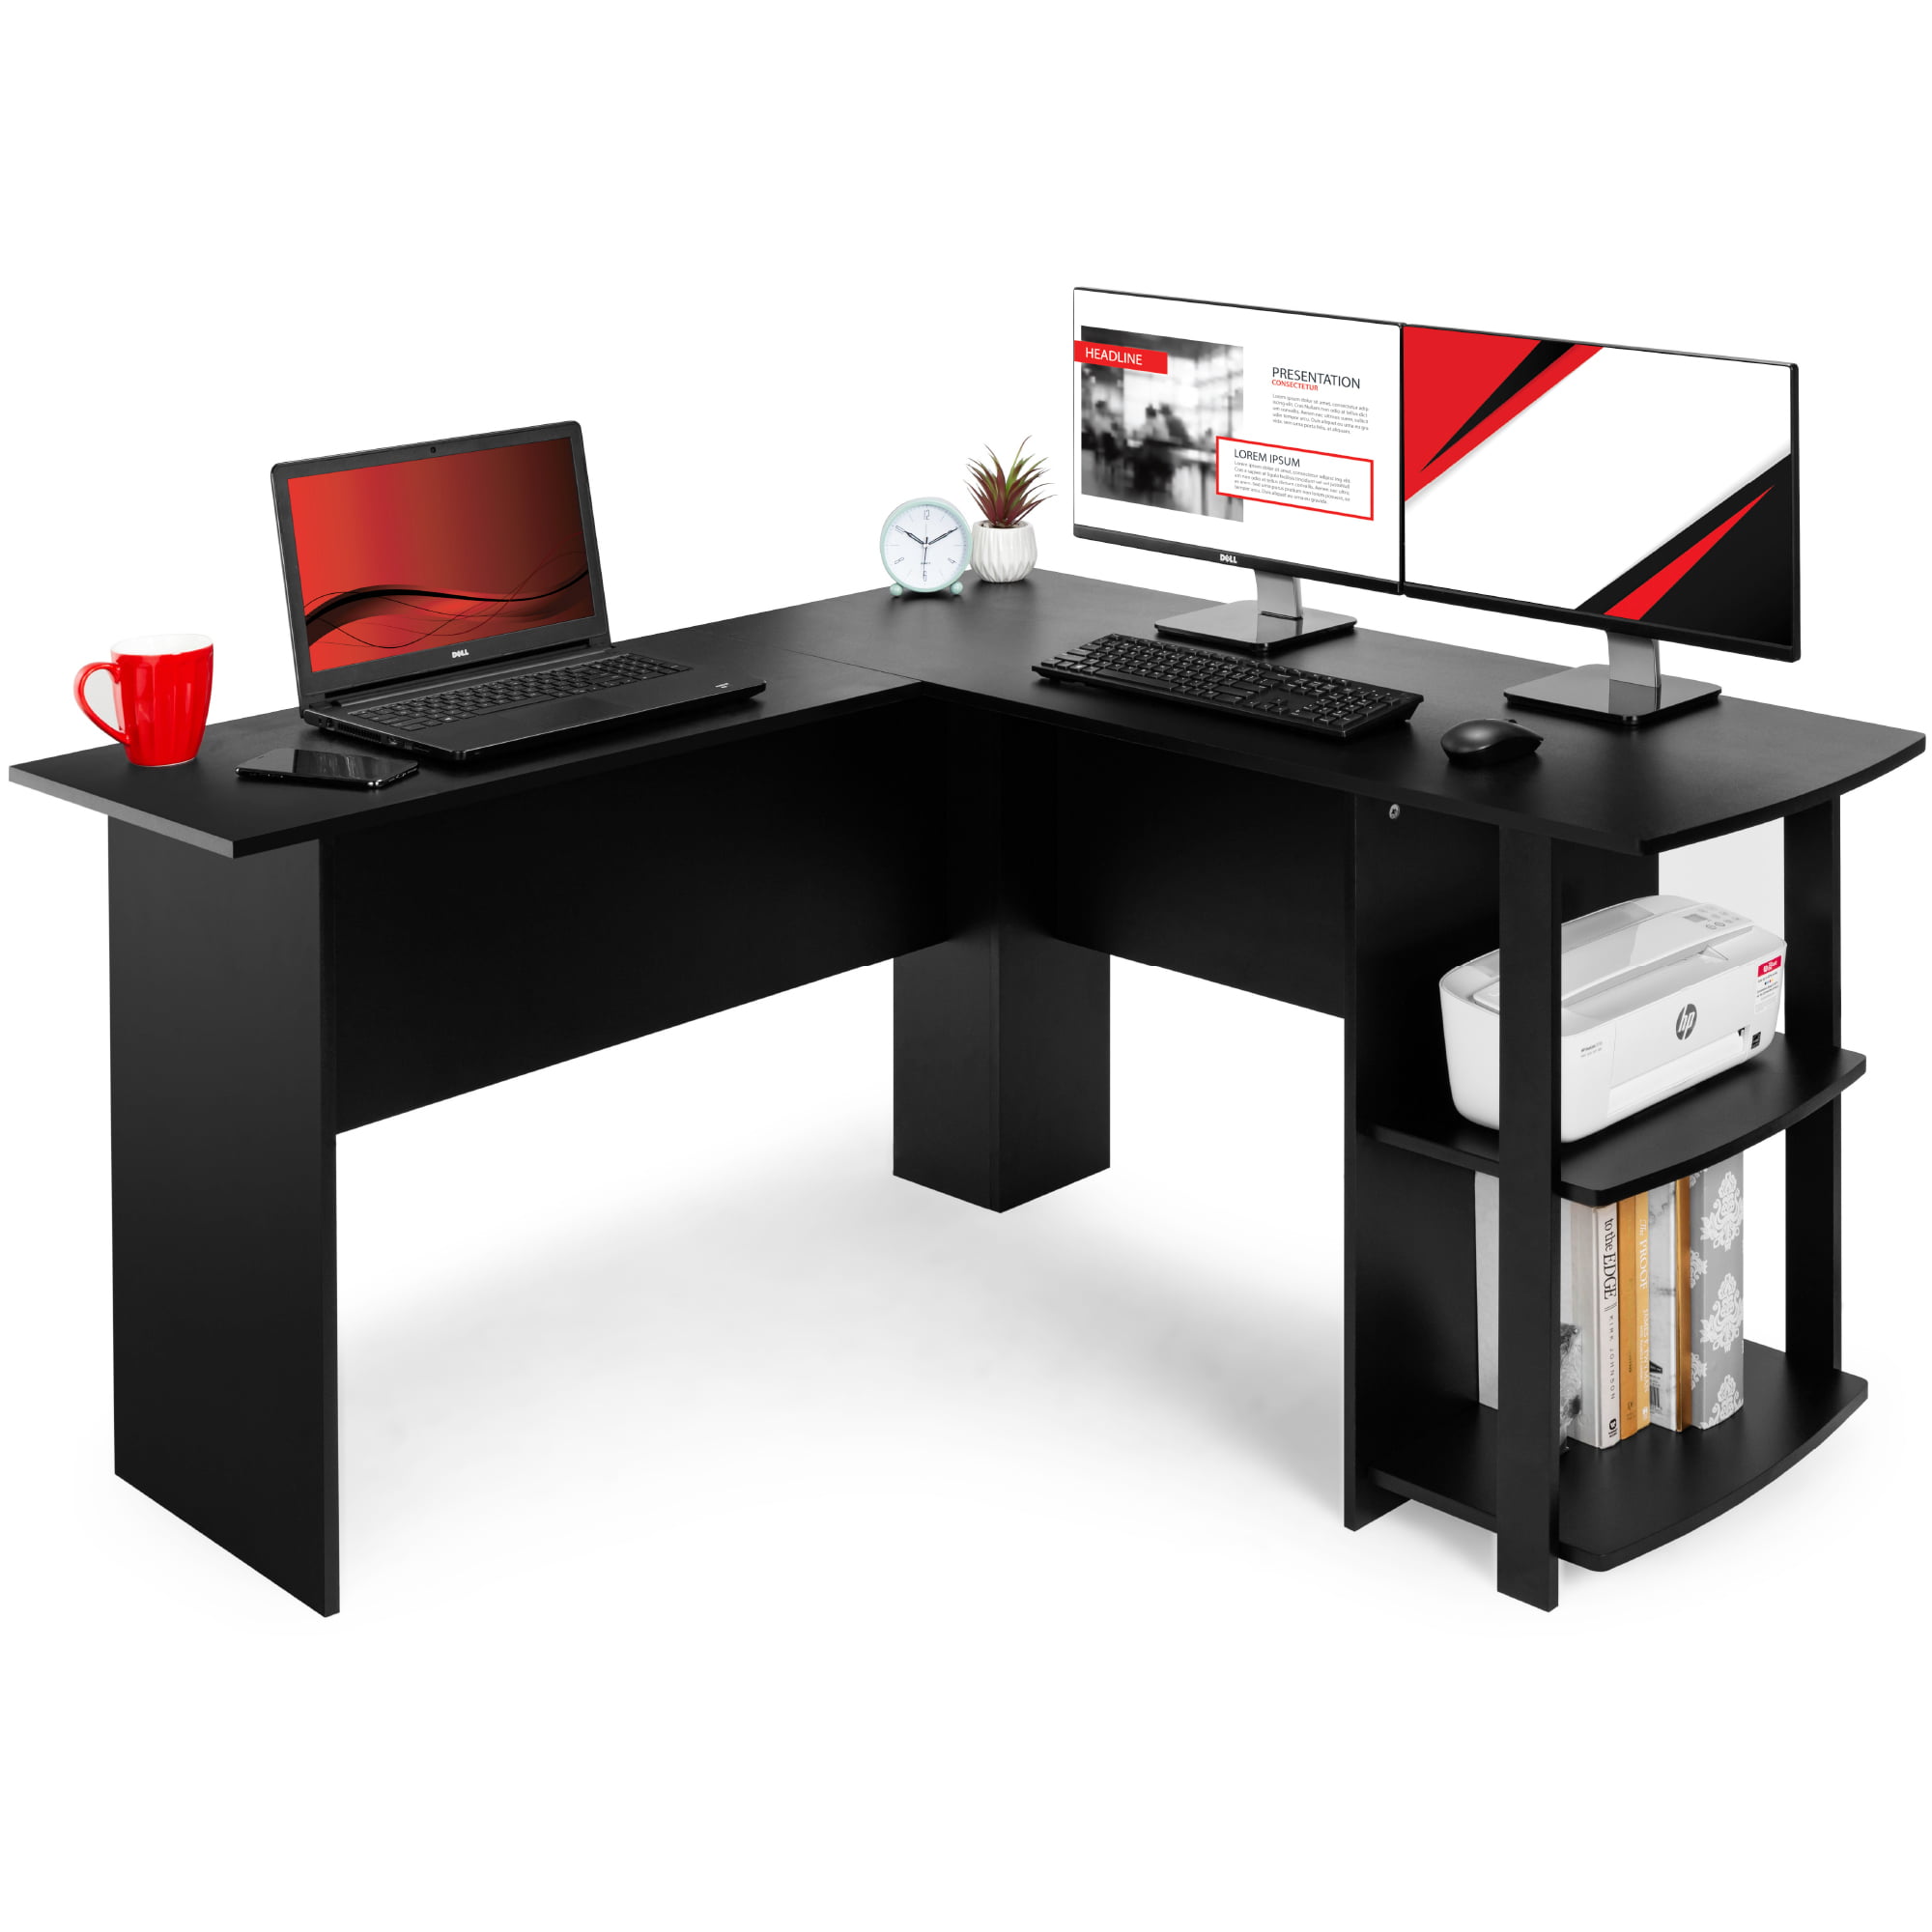 Details about   L-Shape Corner Computer Desk MDF Laptop PC Table Workstation Study Home Office 